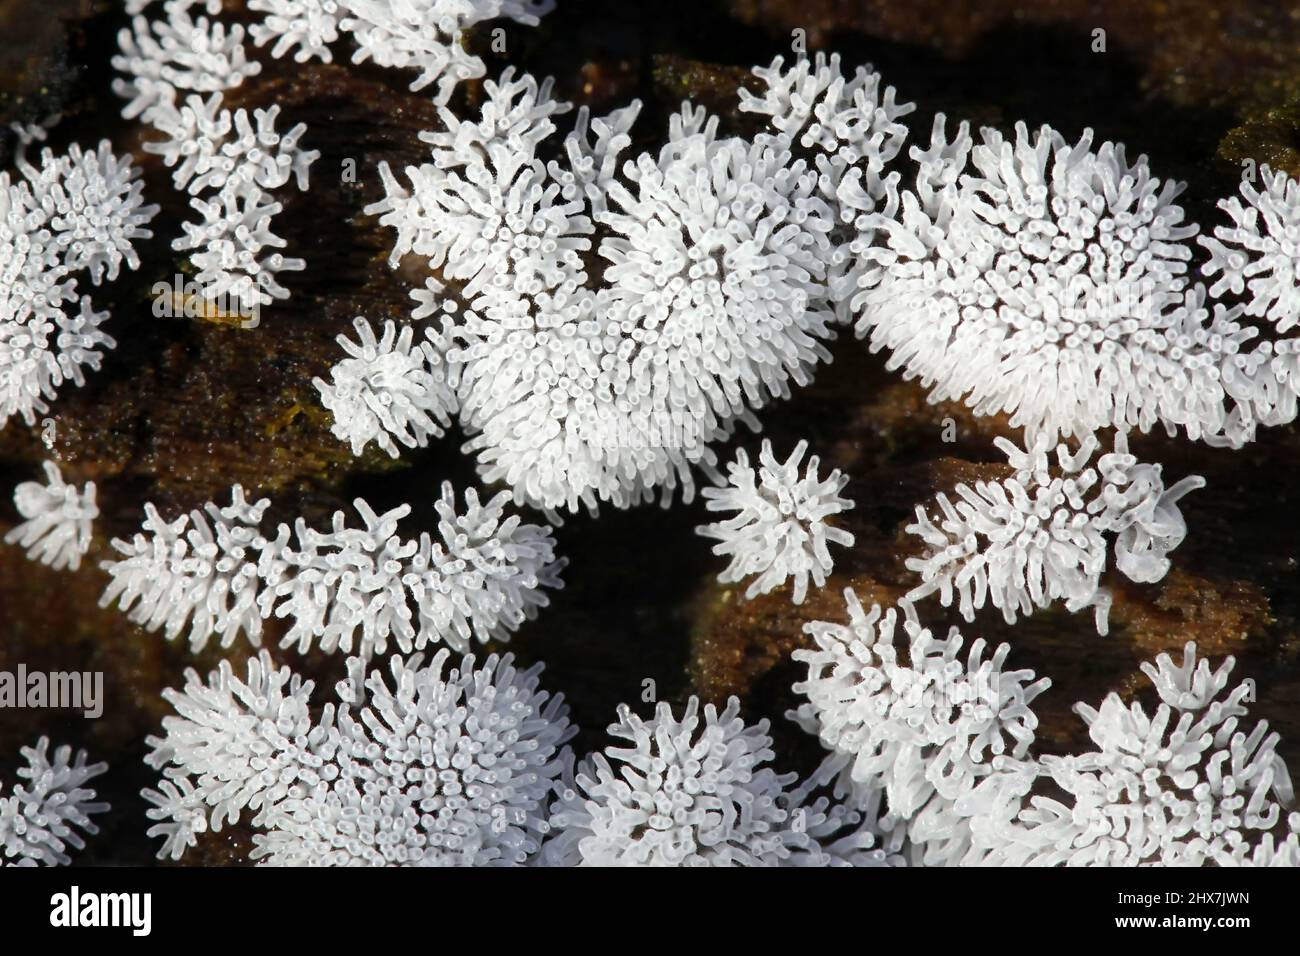 Coral slime mold, Ceratiomyxa fruticulosa Stock Photo